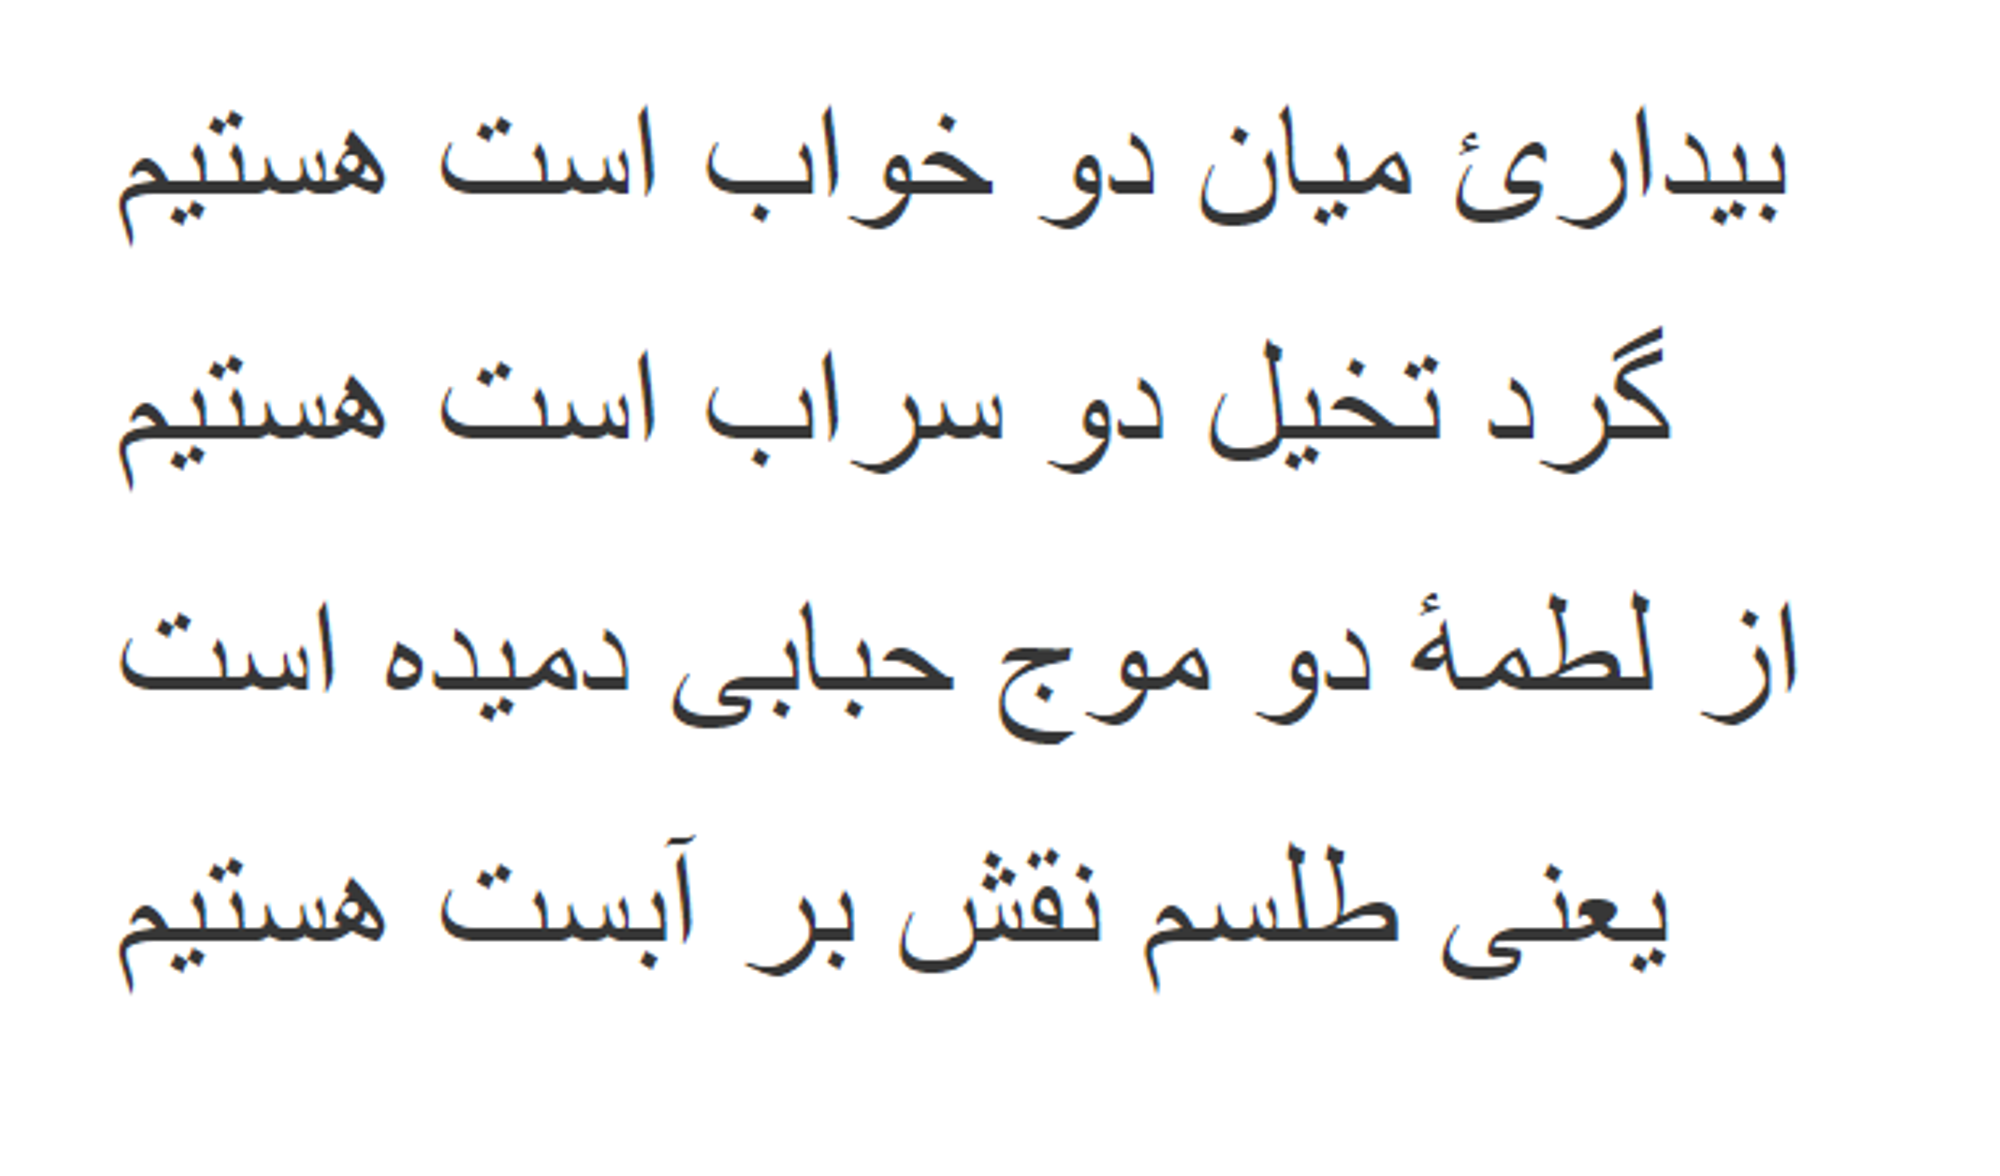 Original poem sourced from https://blogs.harvard.edu/sulaymanibnqiddees/tag/arabic-sufi-poetry/